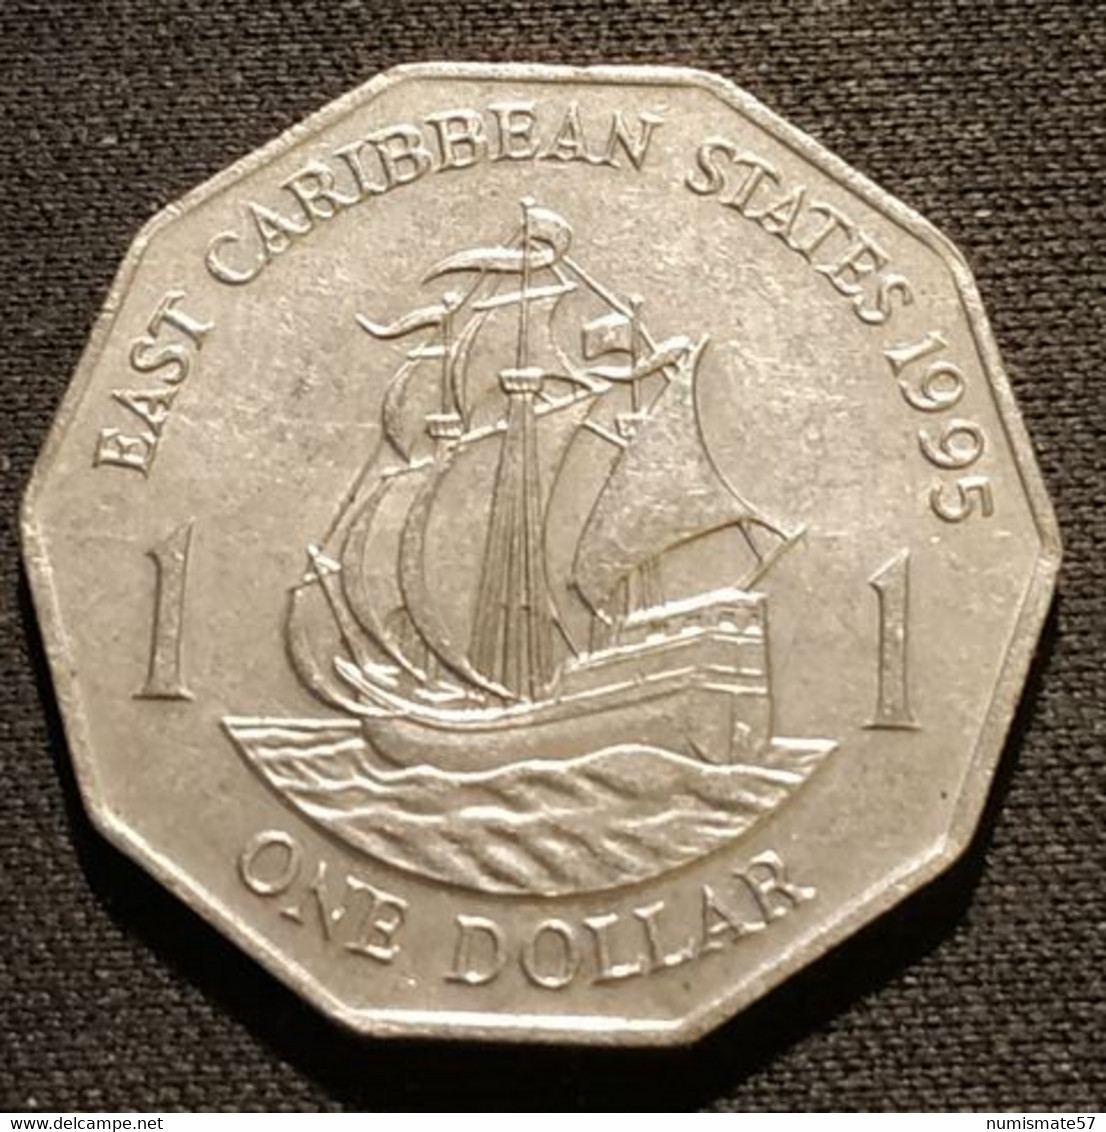 EAST CARIBBEAN STATES - 1 DOLLAR 1995 - Elizabeth II - 2e Effigie - KM 20 - Caraïbes Orientales (Etats Des)